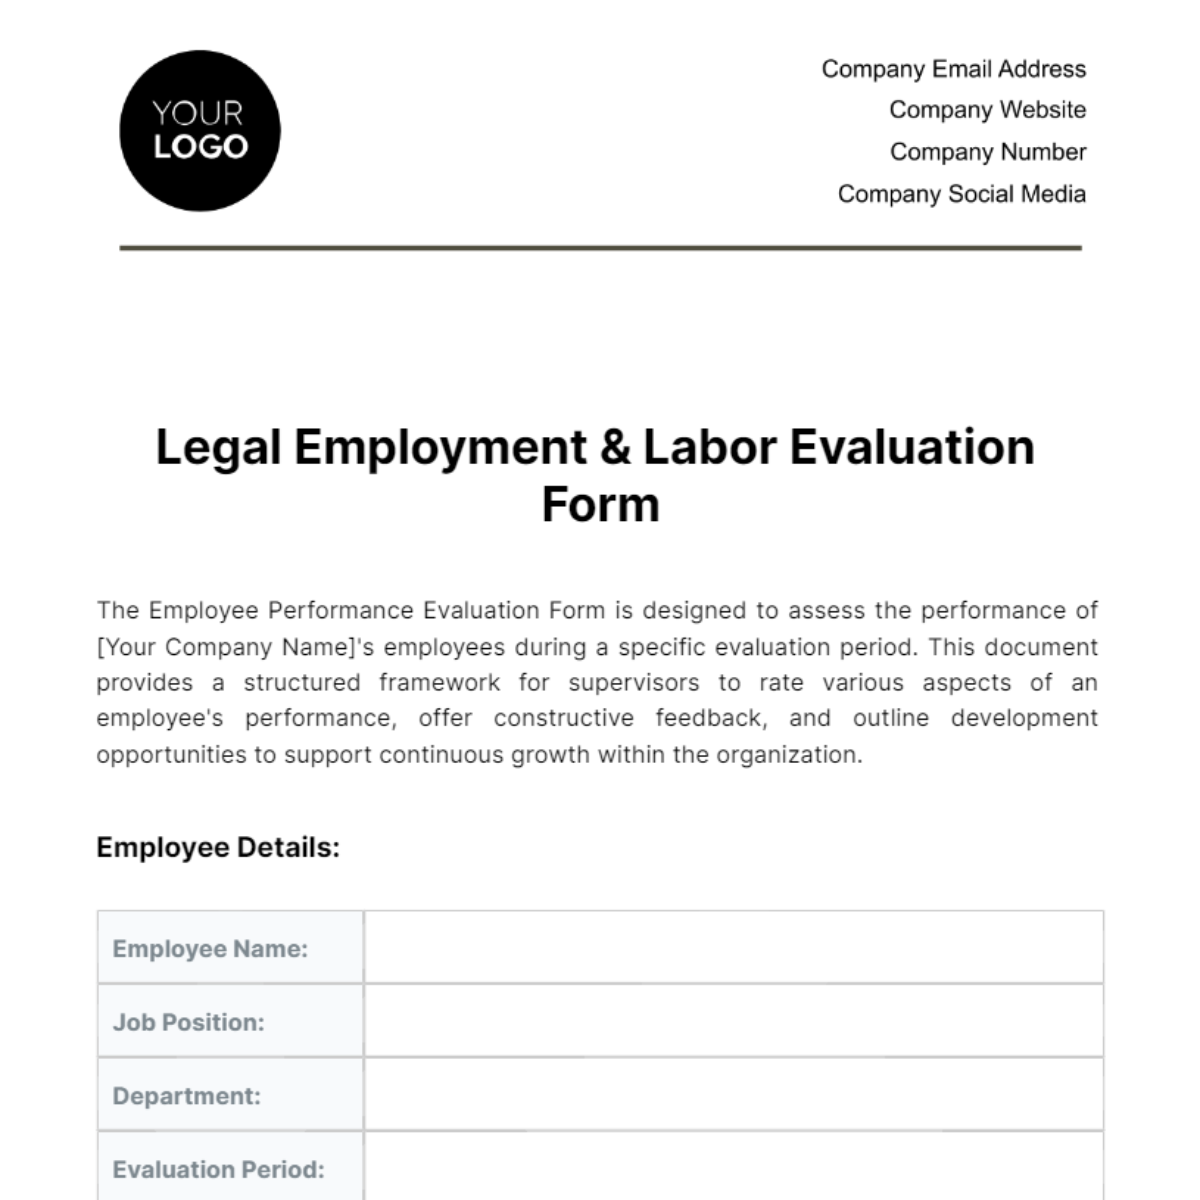 Legal Employment & Labor Evaluation Form Template